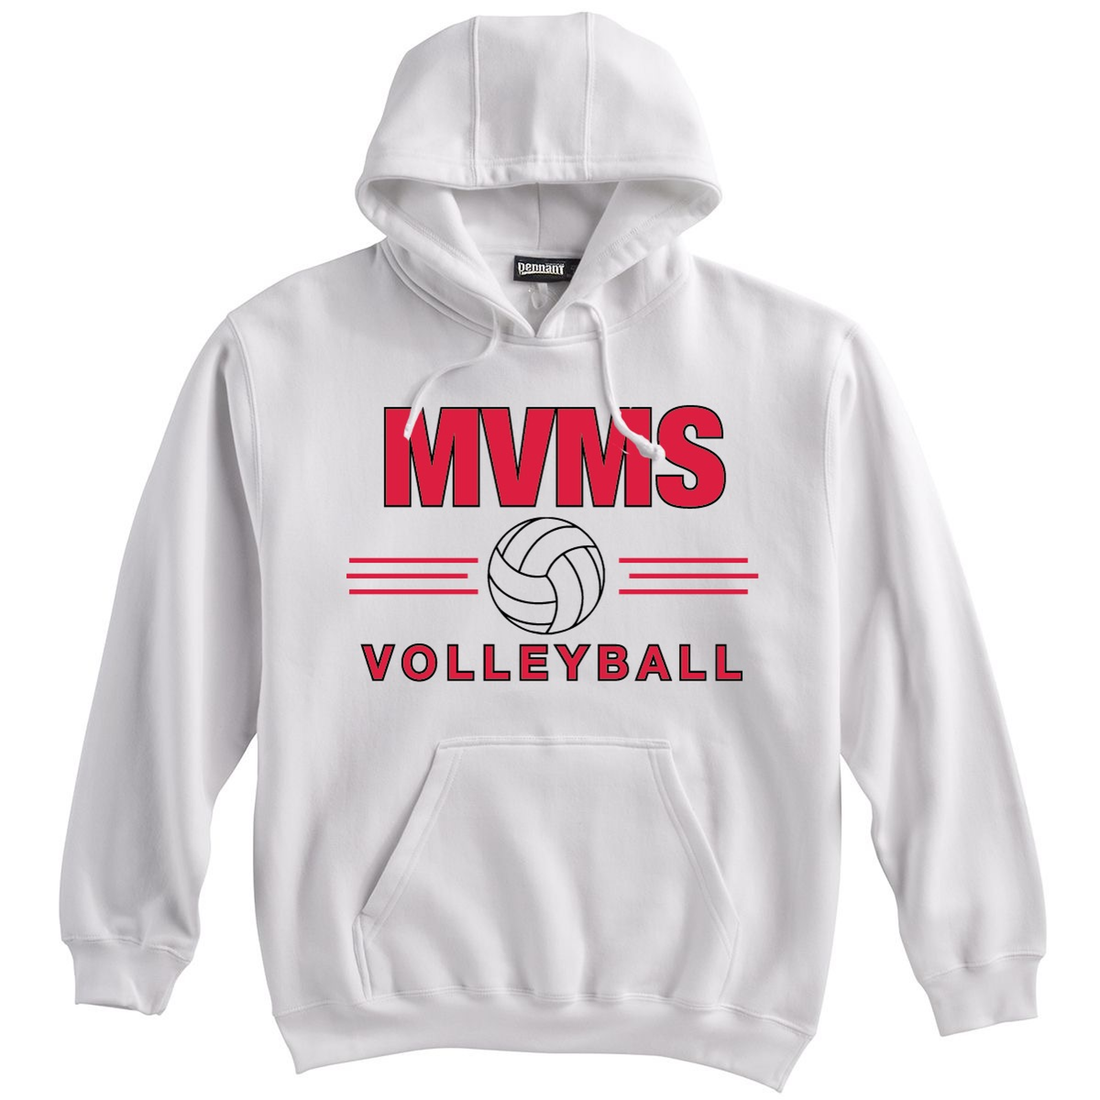 MVMS Volleyball Premium Hoodie